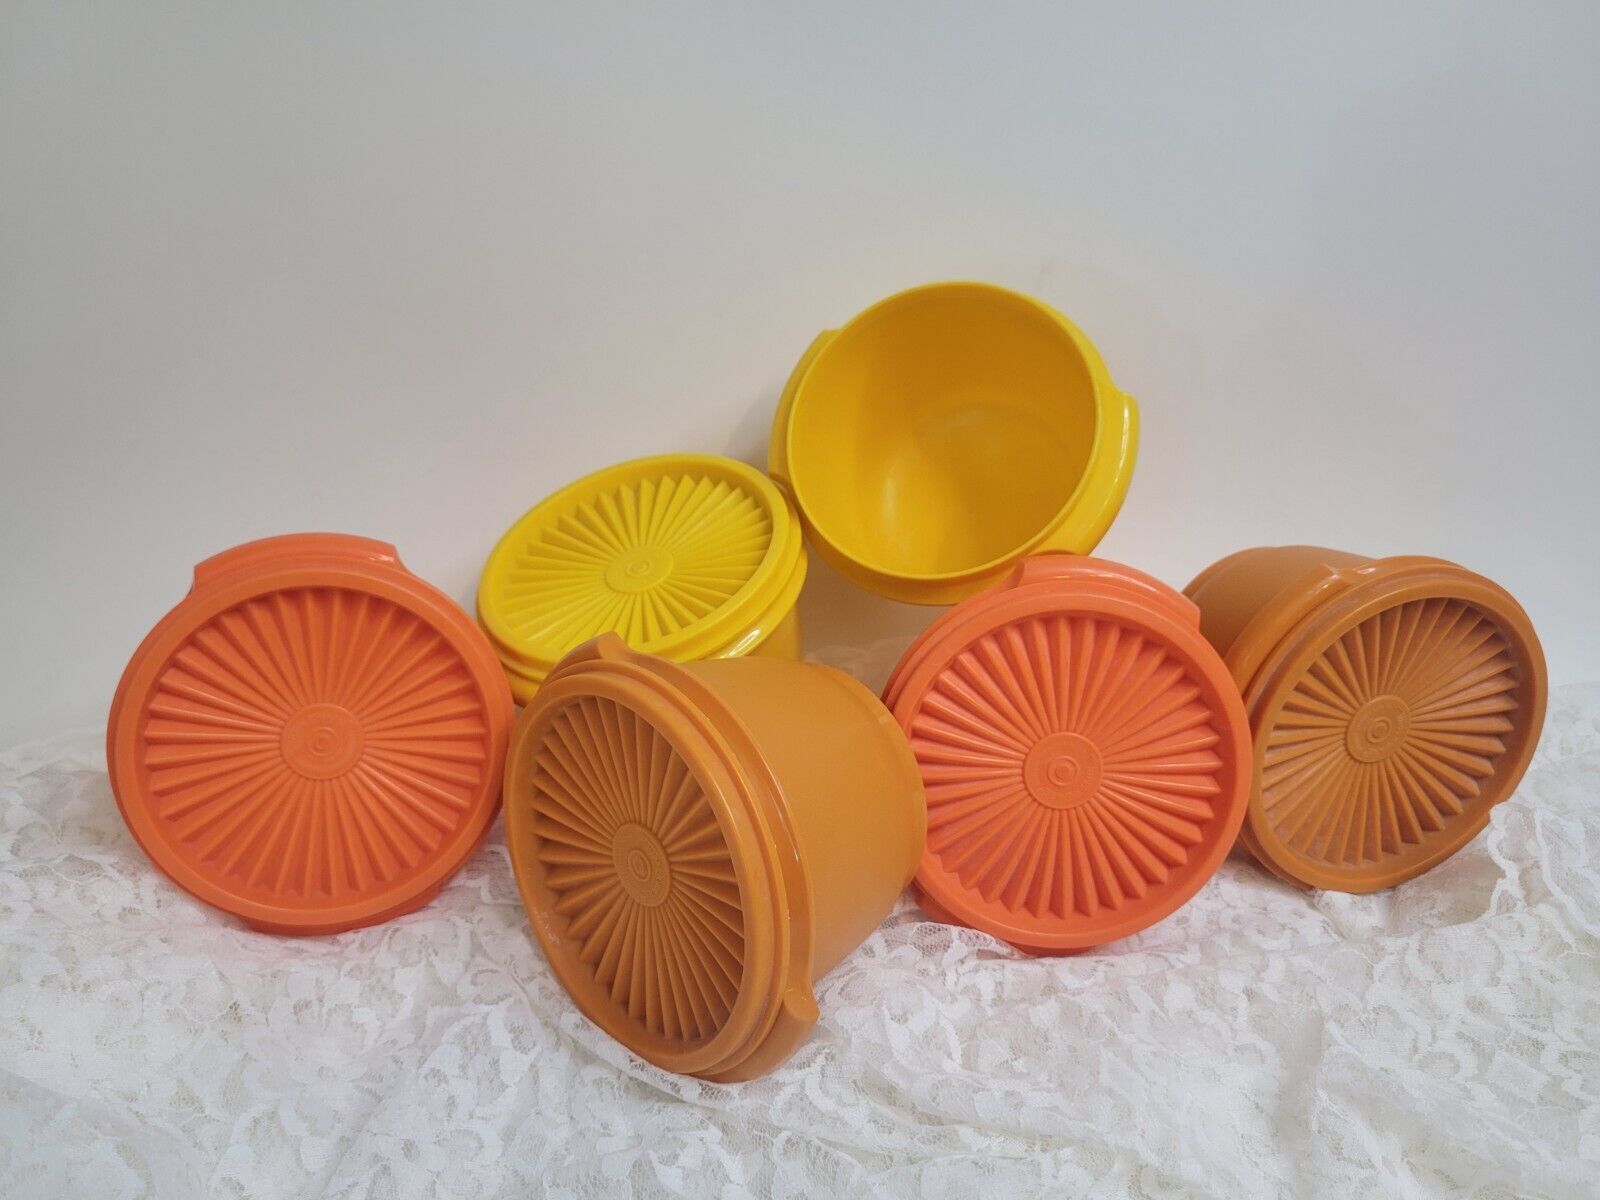 6 Vintage Tupperware Bowls with 5 Lids Yellow Orange - 1 LID MISSING  886-21